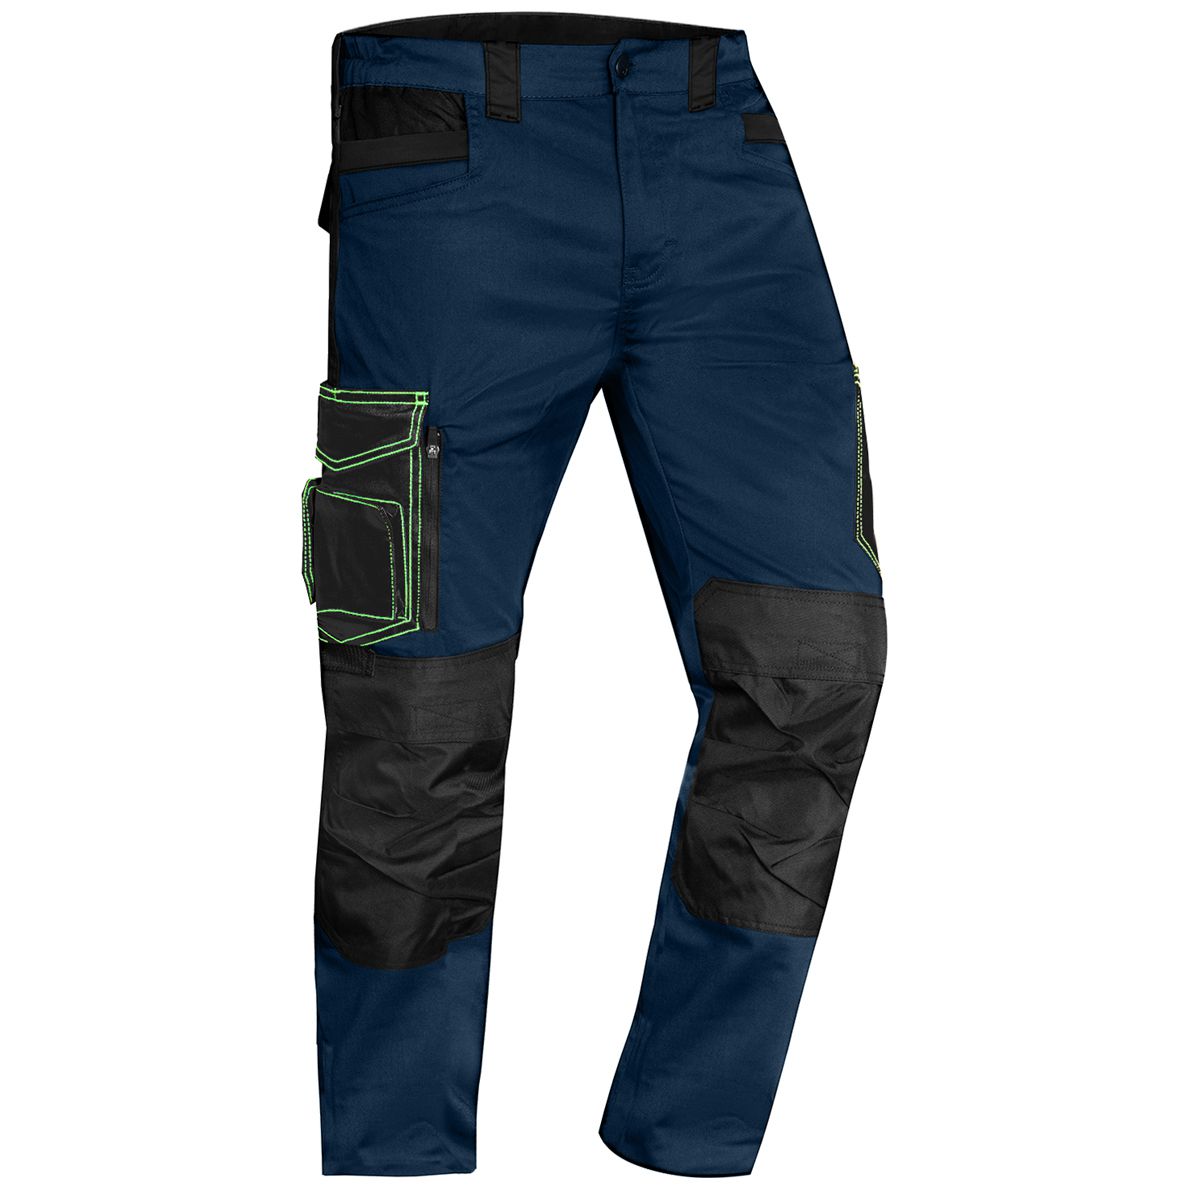 ACE Genesis Men's Work Trousers Long - Men's Cargo Trousers for Work - Stretch Waistband & Knee Pockets - Dark Blue - 44